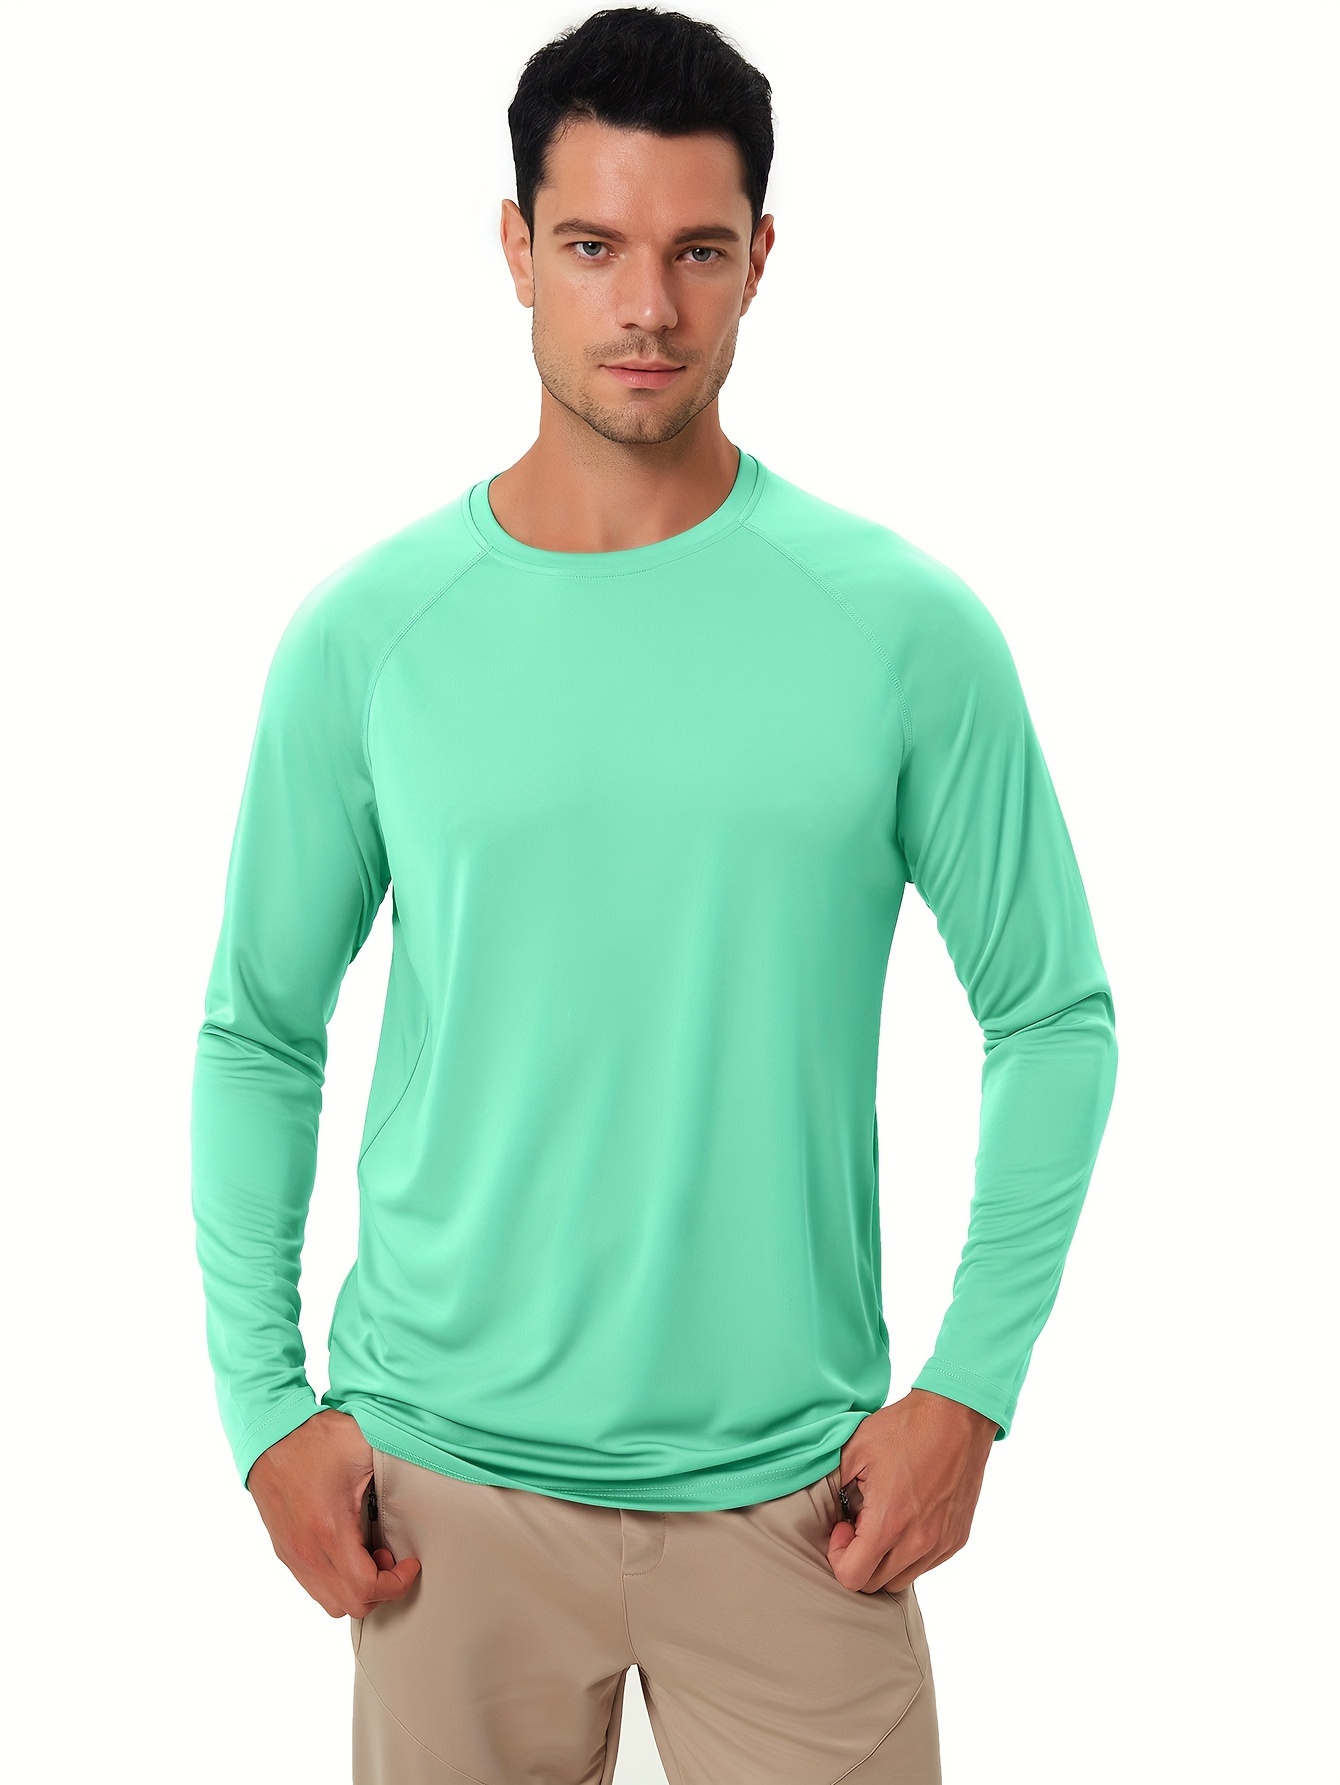  Womens Sun Shirt UPF 50+ UV Protection Clothing Long Sleeve  Rash Guard Shirt Quick Dry Breathable Cool Beach Fishing Swim Tops Mint  Green XL